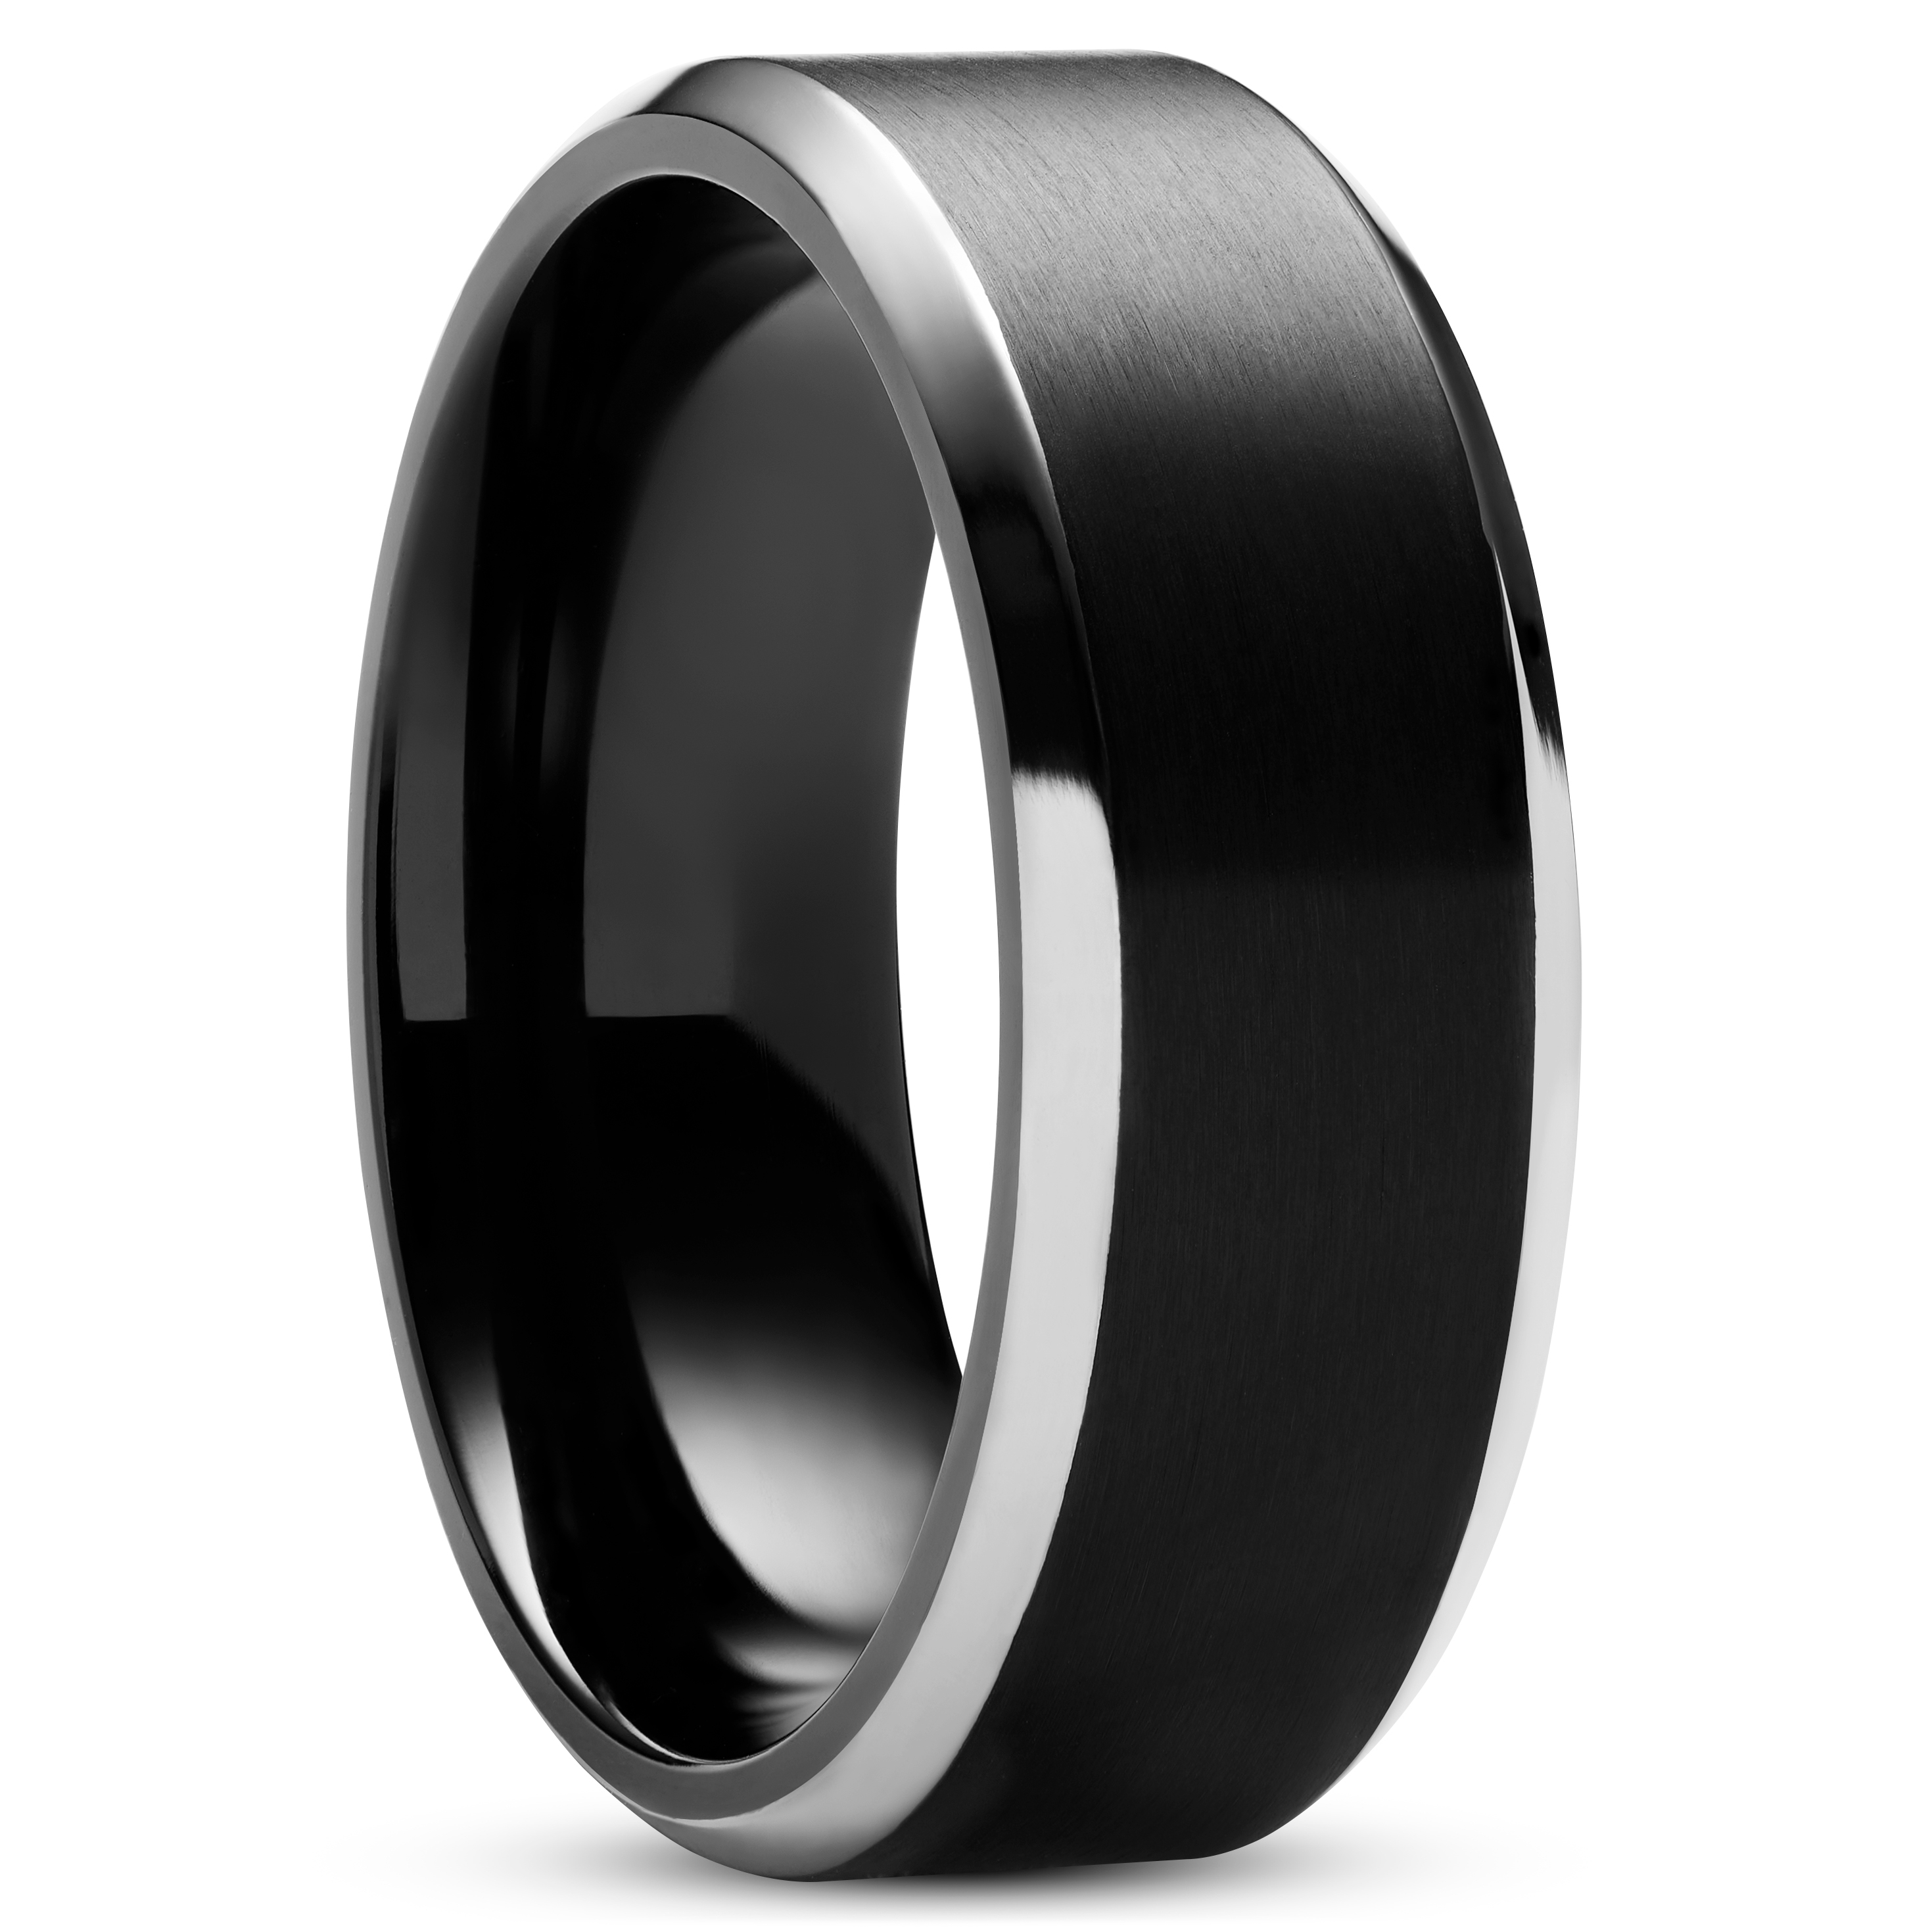 6MM Titanium Ring - Domed Black Satin Center and Bevel Edge - Triton Jewelry